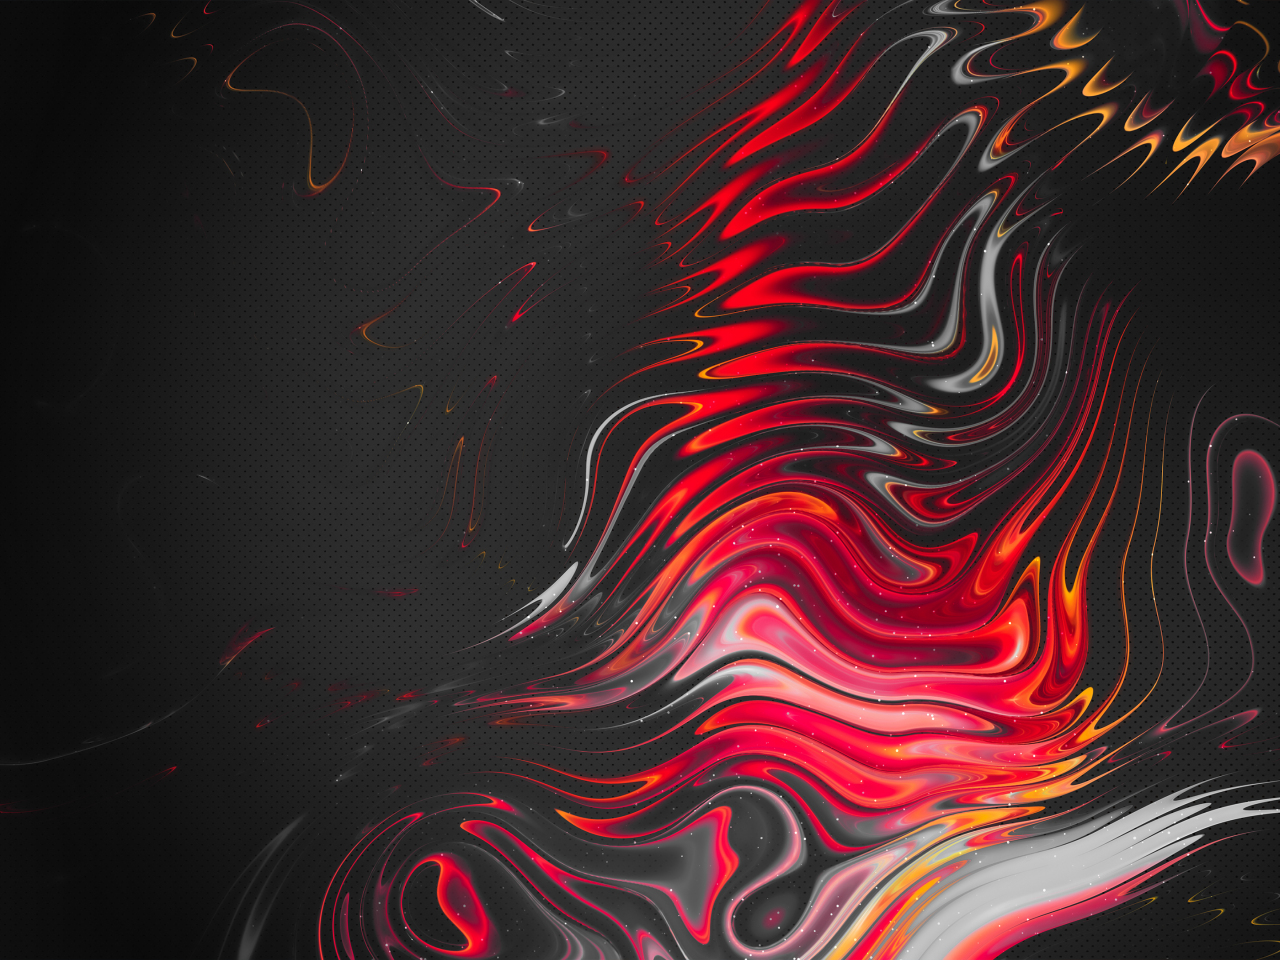 Download wallpaper 1280x960 red-dark, curves, abstract, ripple effect,  standard 4:3 fullscreen 1280x960 hd background, 26003